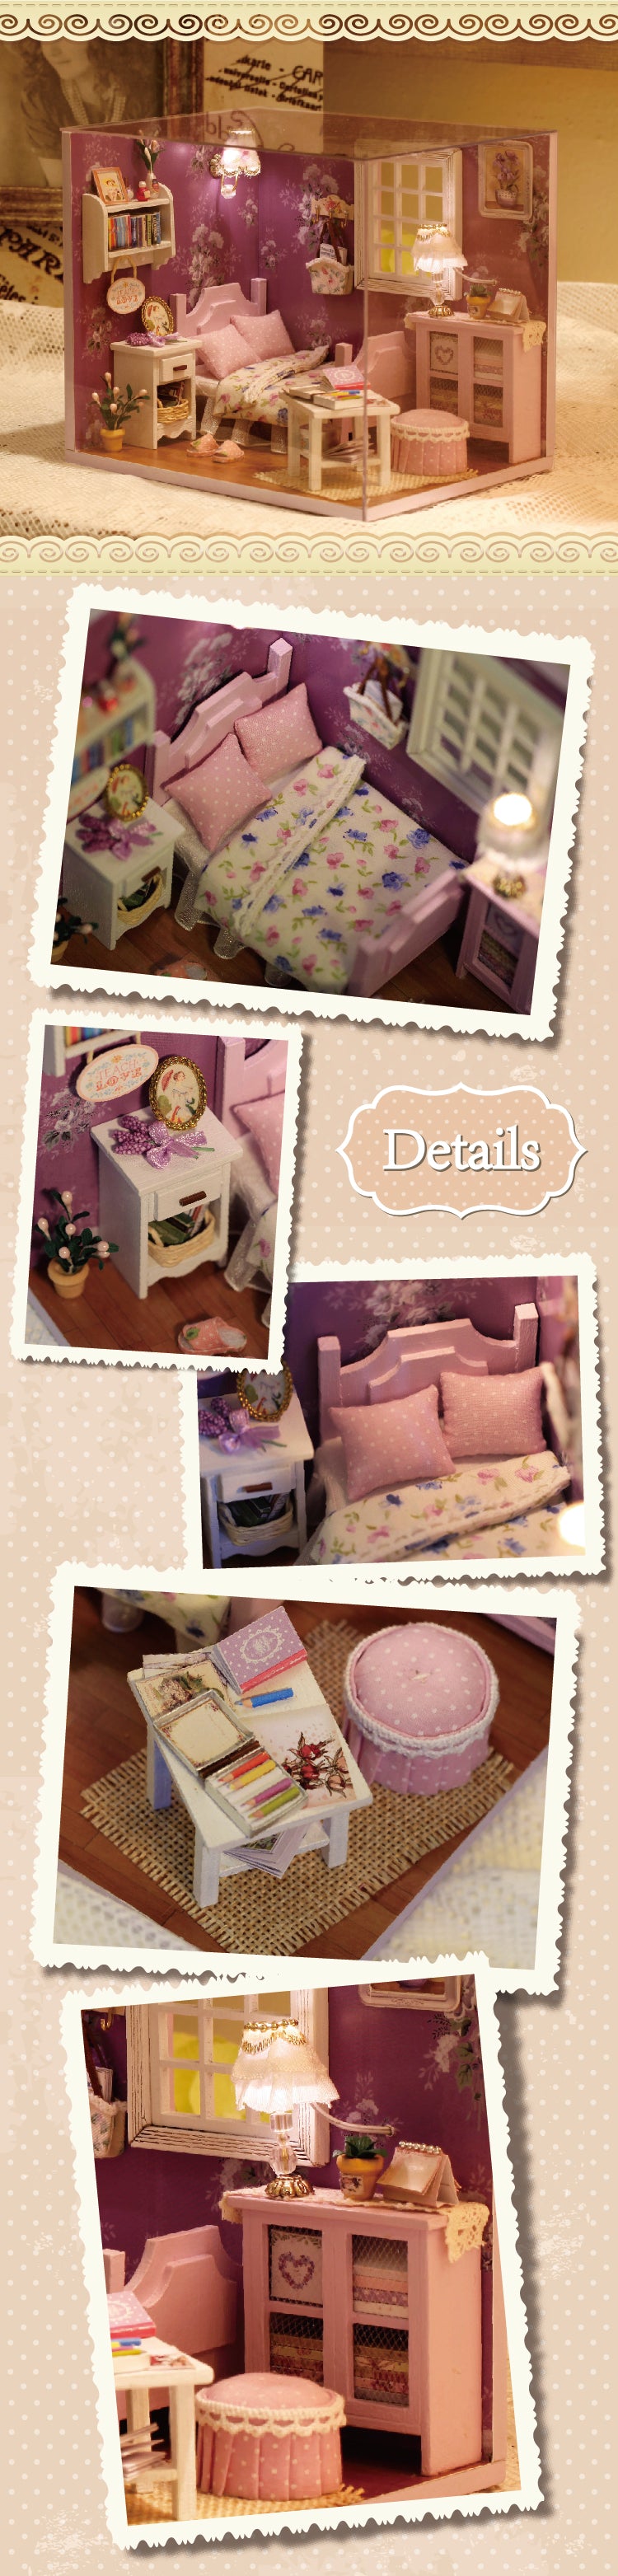 CuteRoom Sweet Sunshine★Miniature Doll House Dollhouse★DIY Gift Wooden Handmade